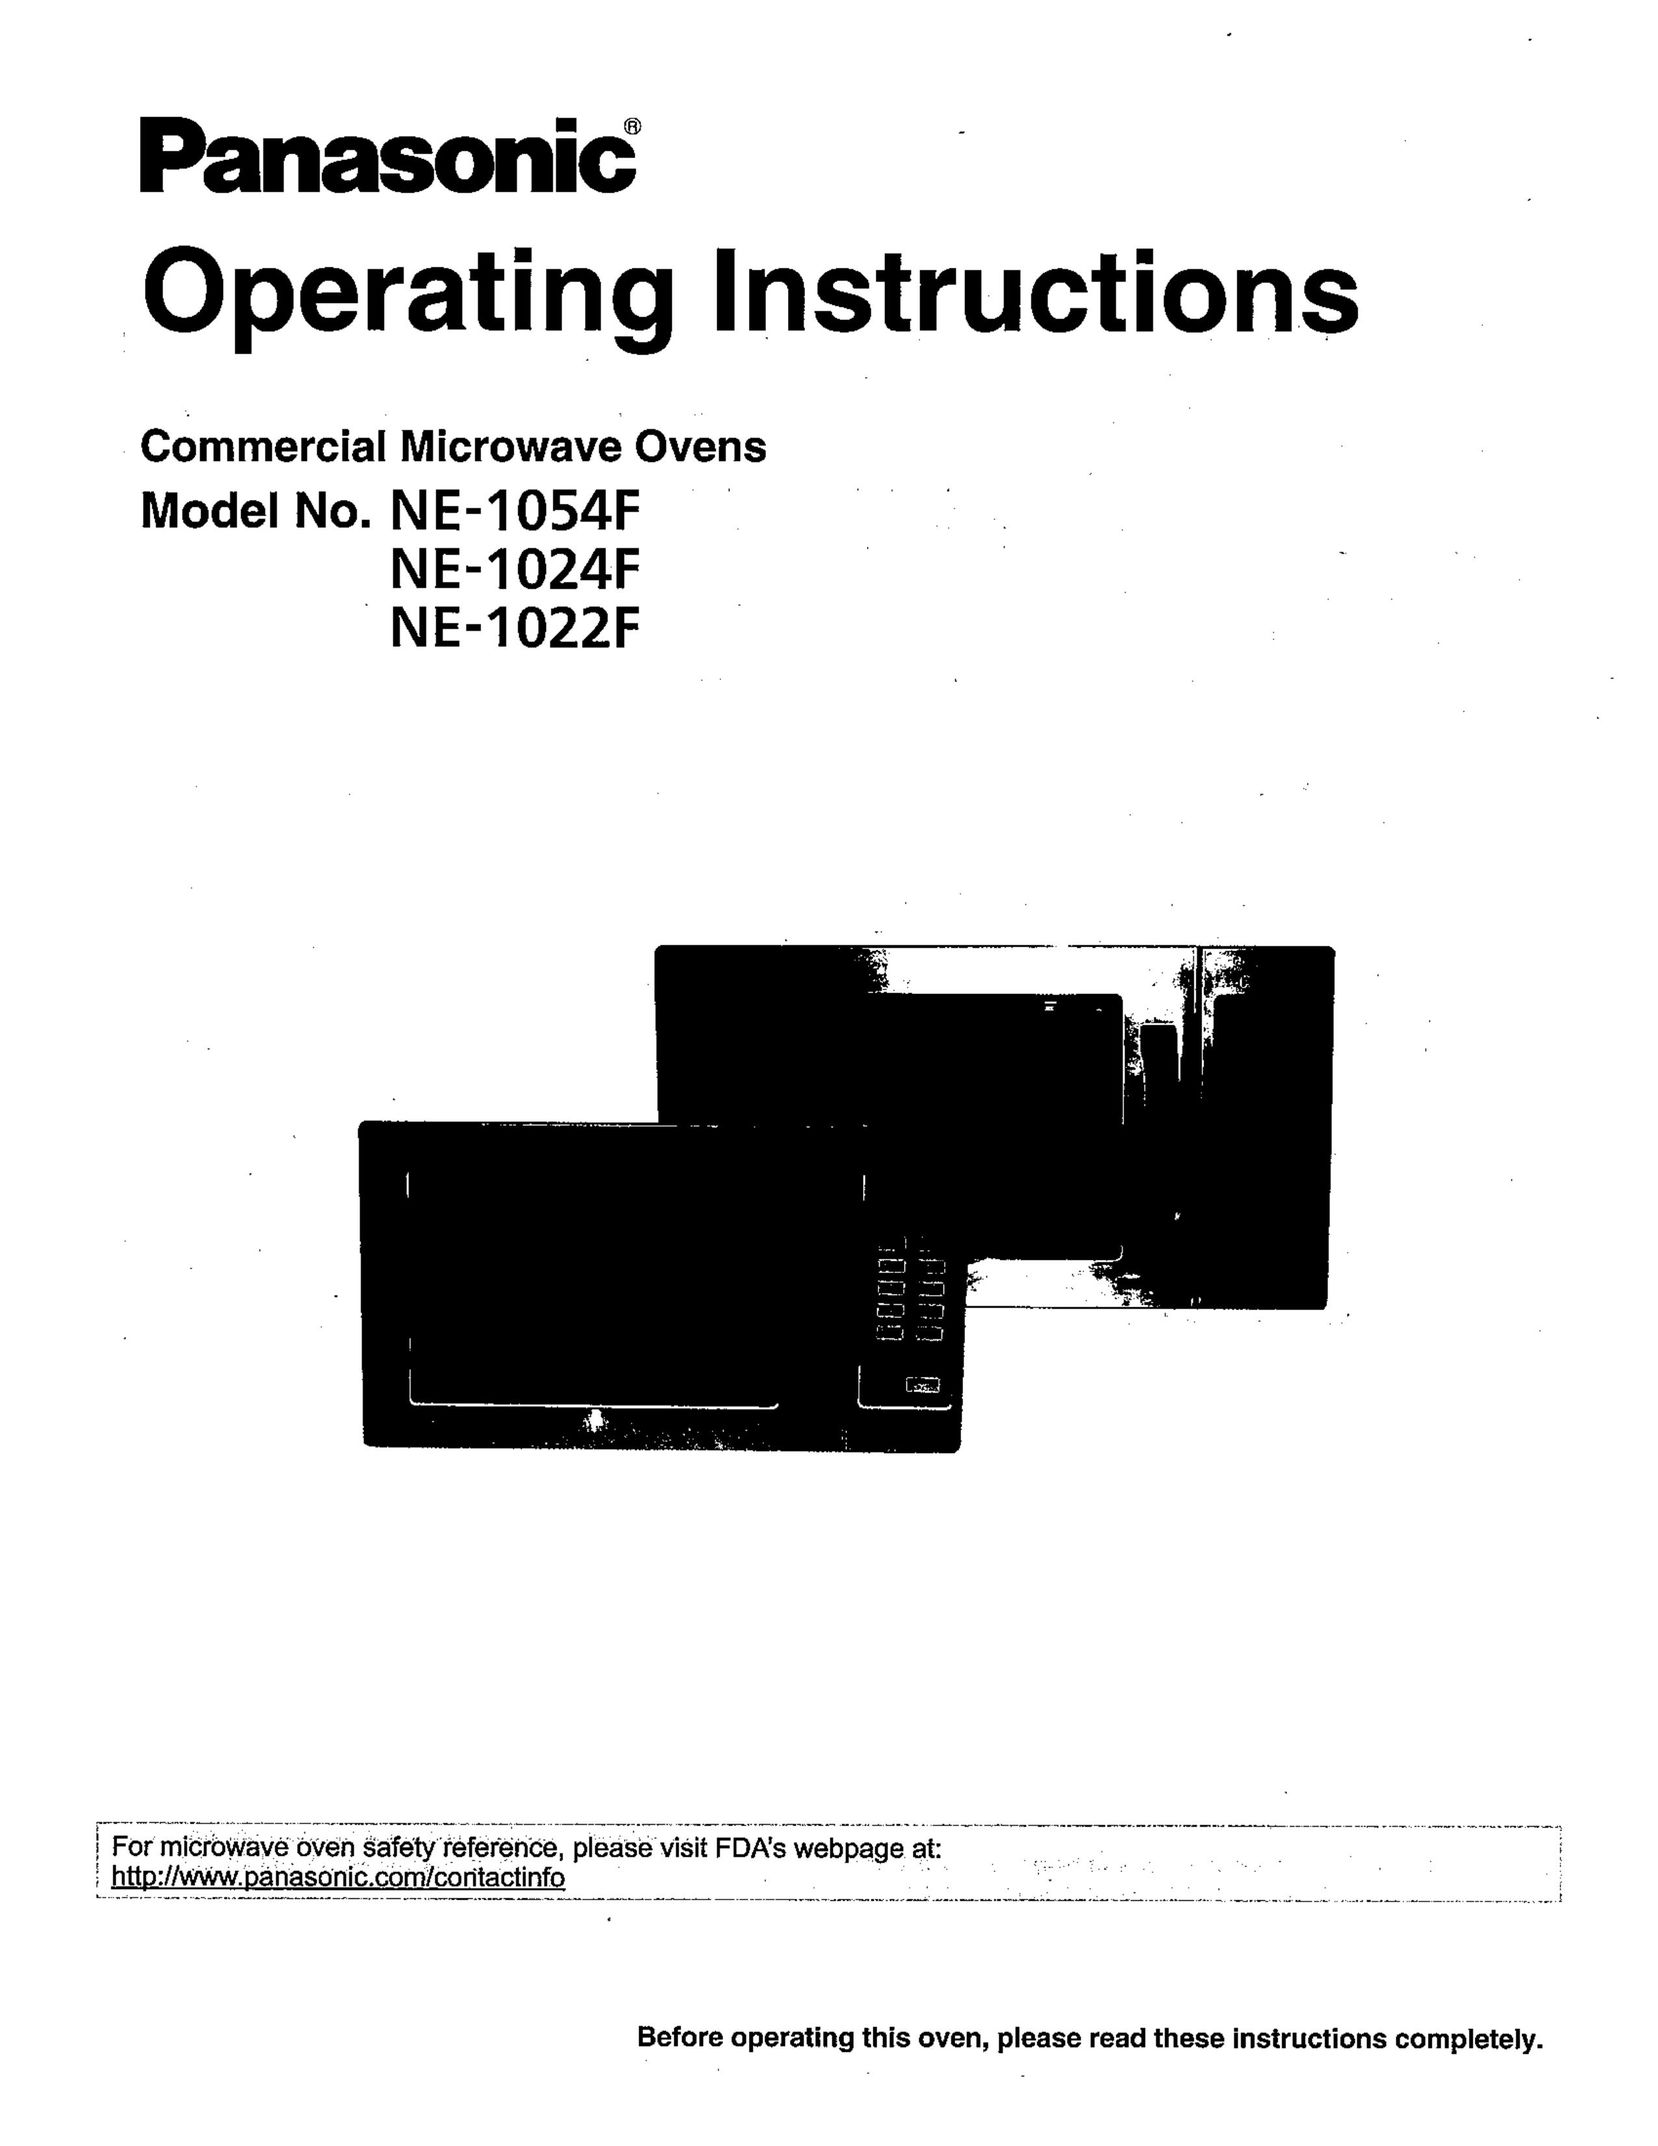 Panasonic NE-1022F Microwave Oven User Manual